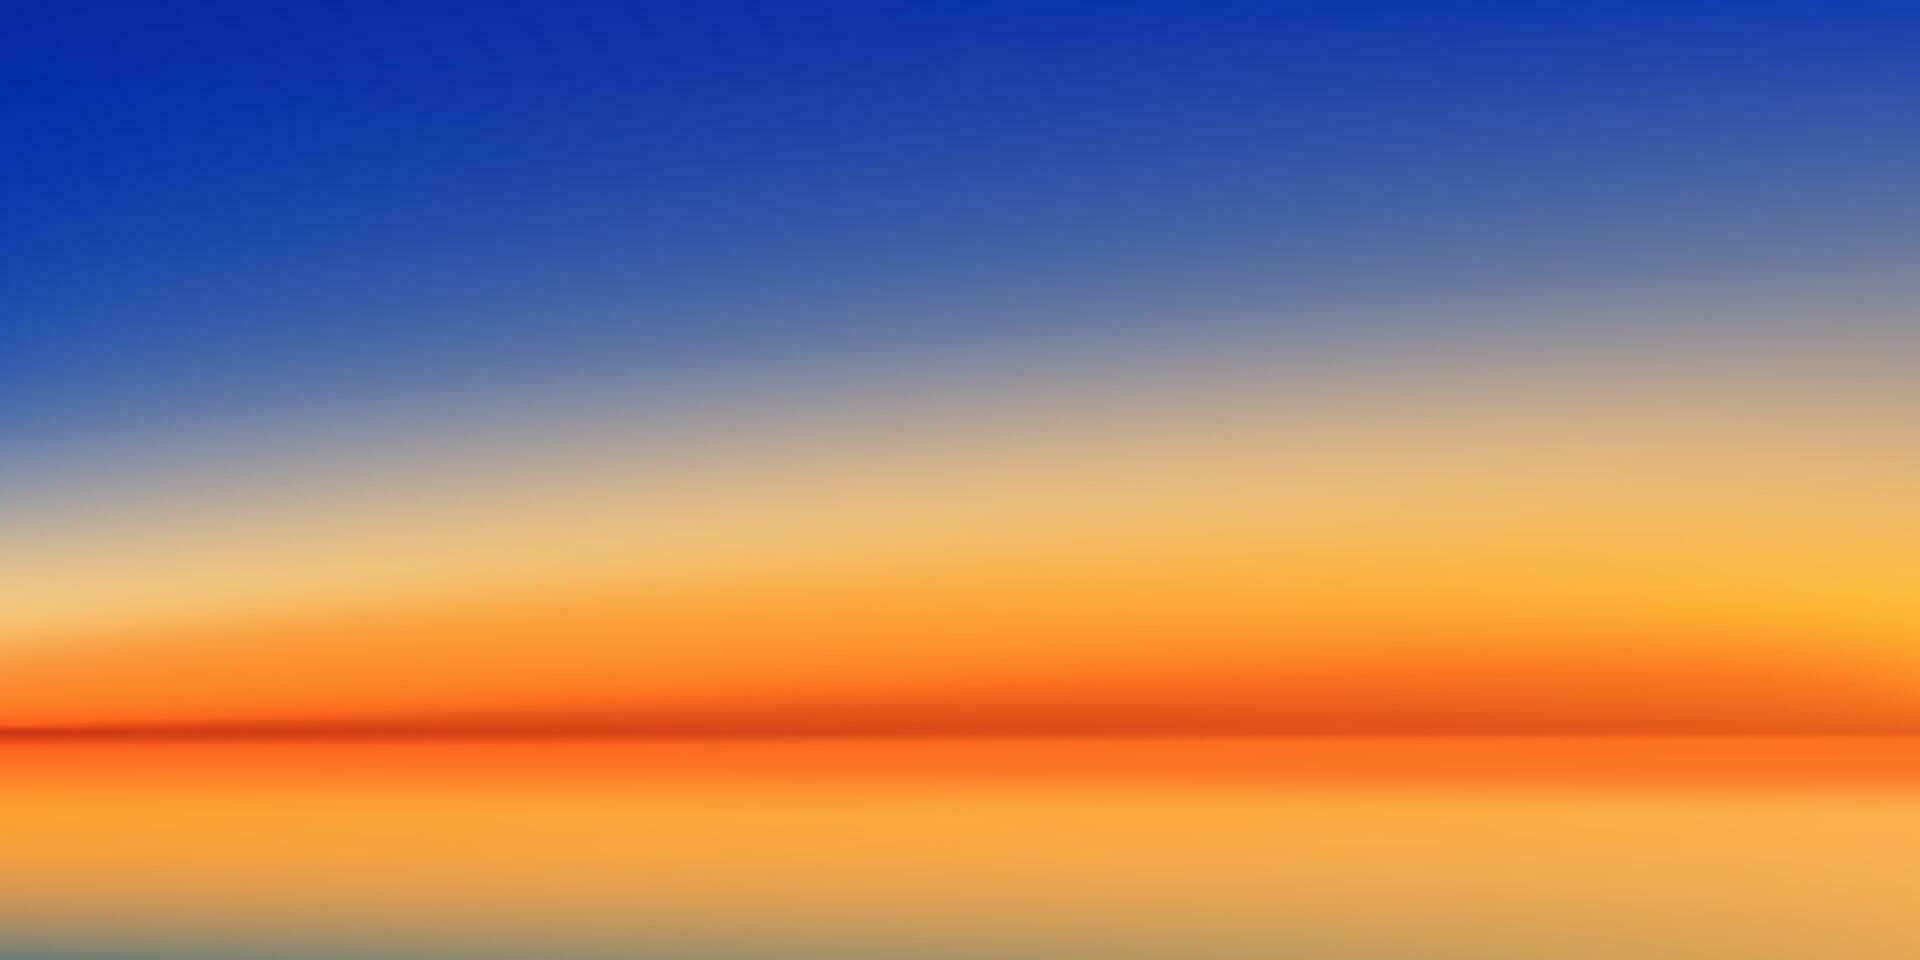 zonsondergang lucht met Doorzichtig blauw, oranje, geel kleur in avond, dramatisch schemering landschap schemer lucht in gouden uur, vector horizon zonsopkomst in ochtend- banier van zonlicht voor vier seizoen achtergrond